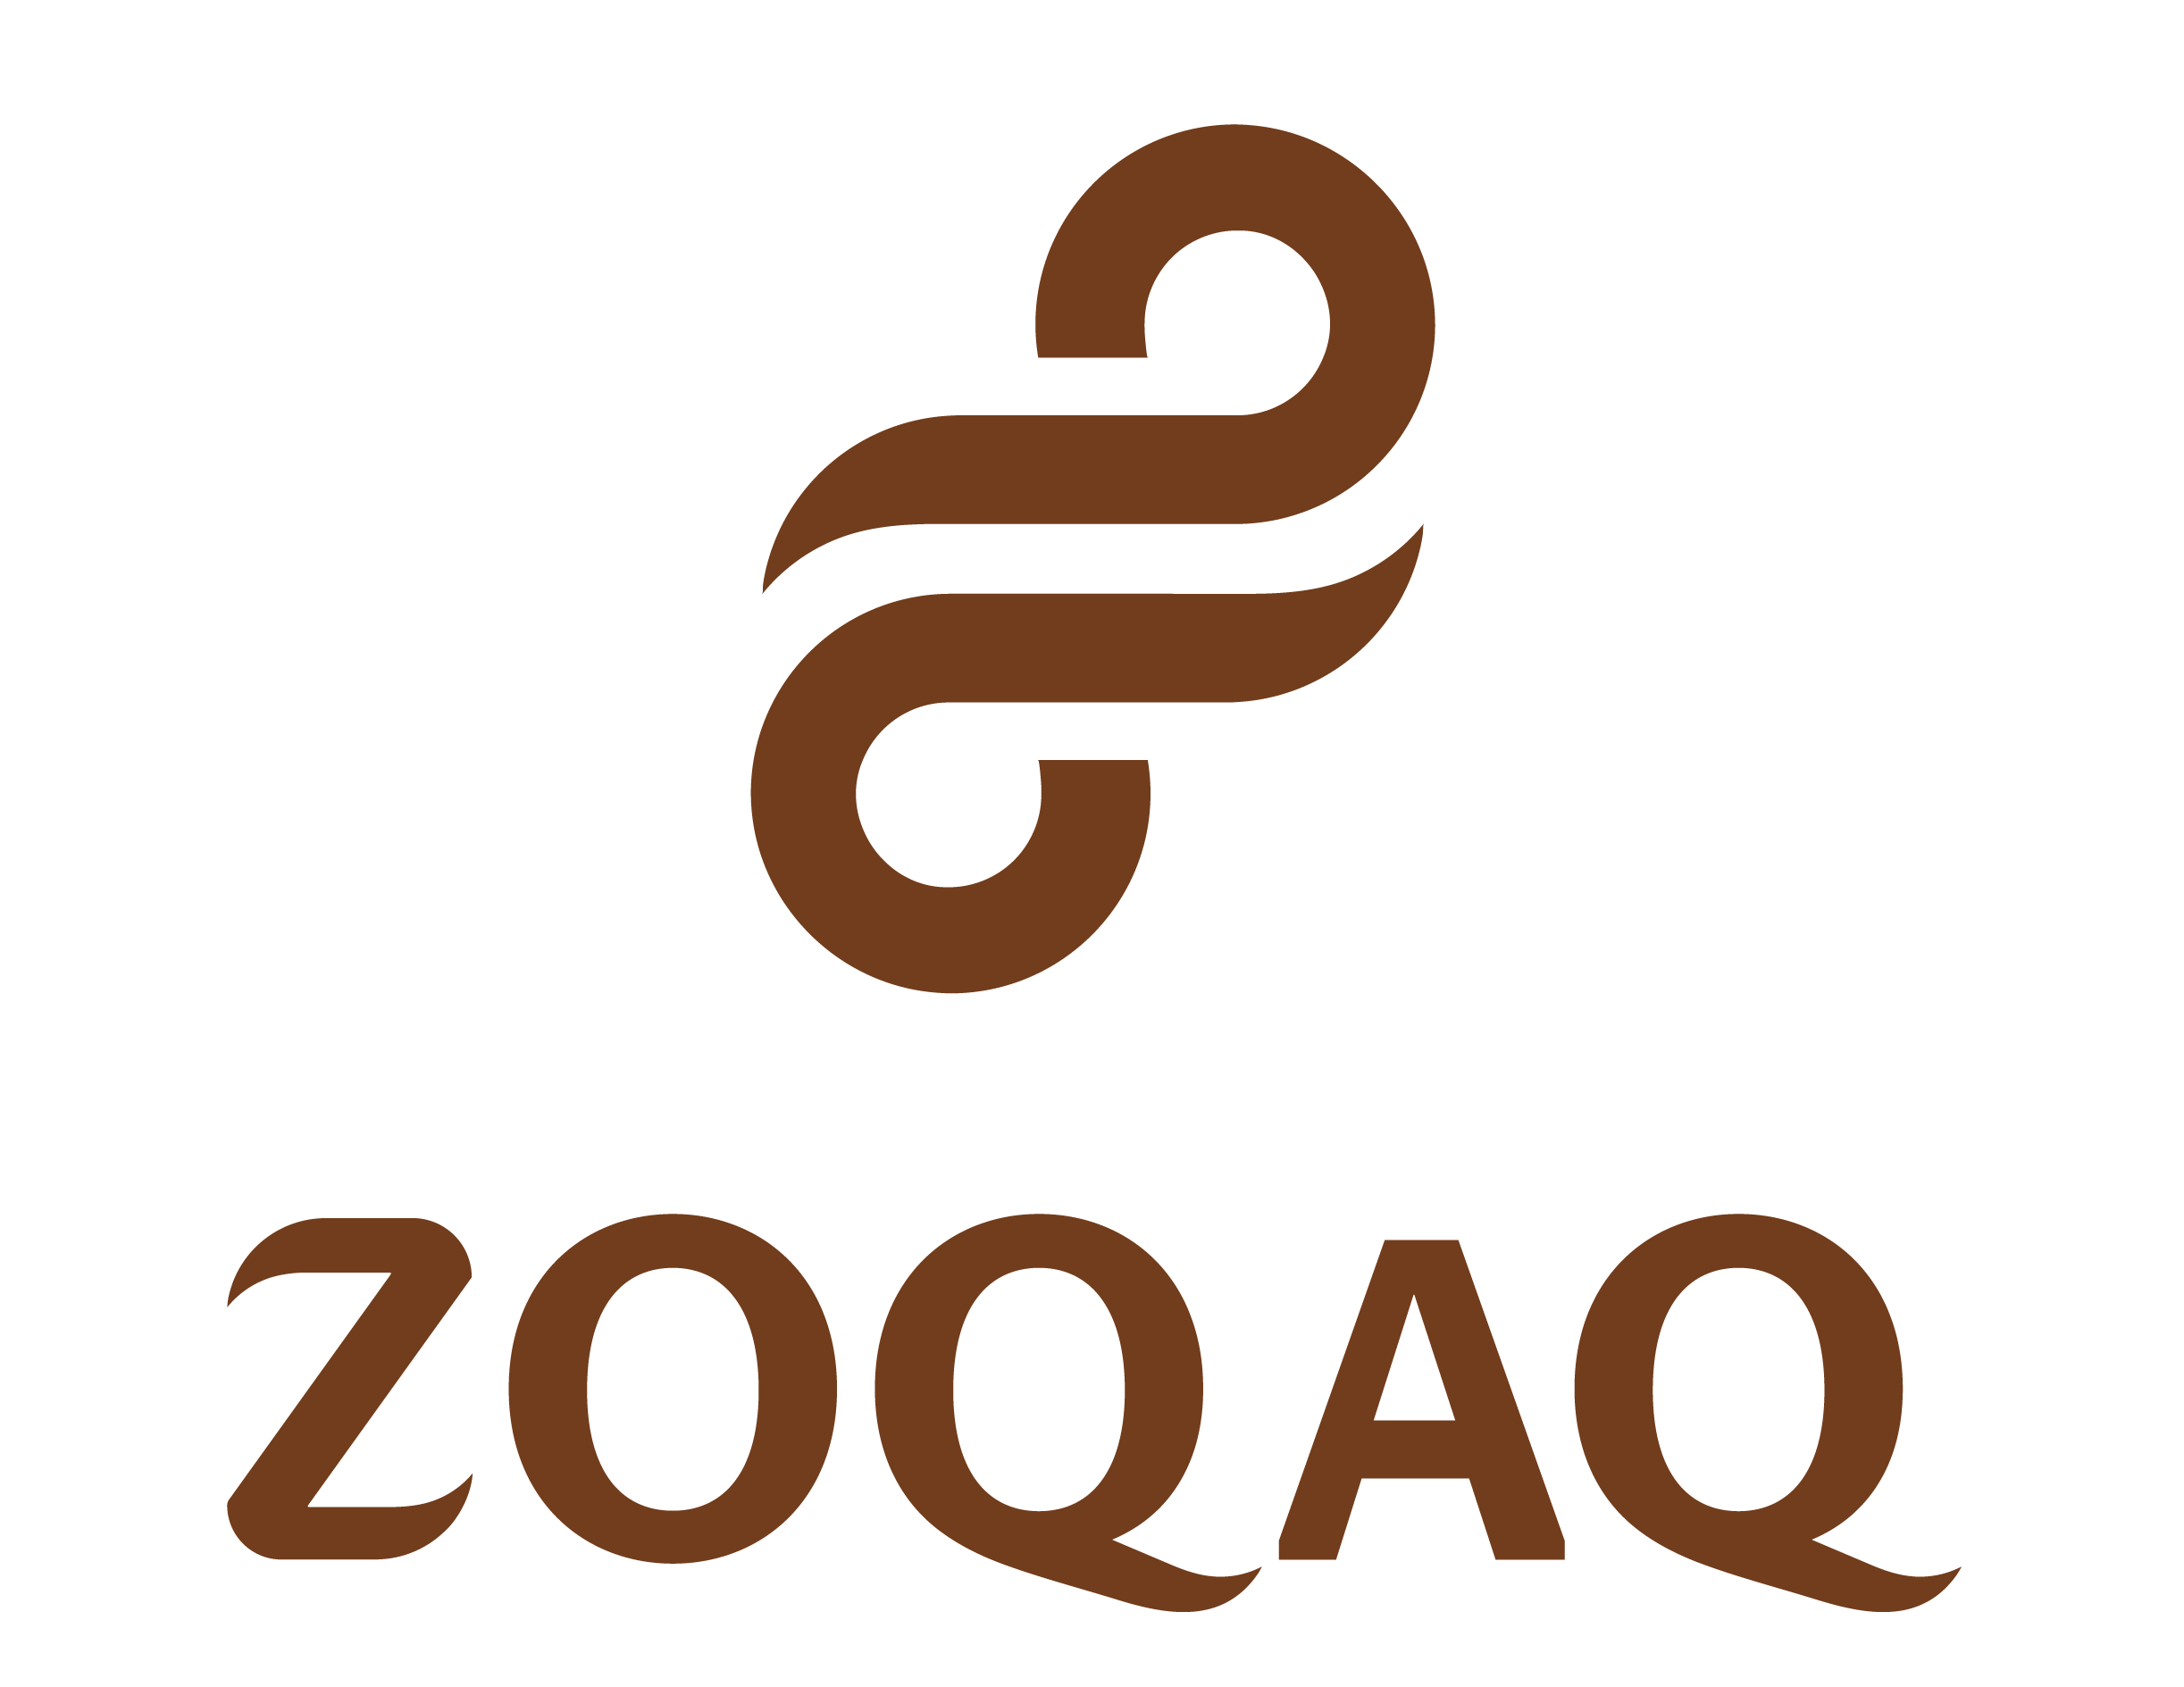 Zoqaq Marketplace